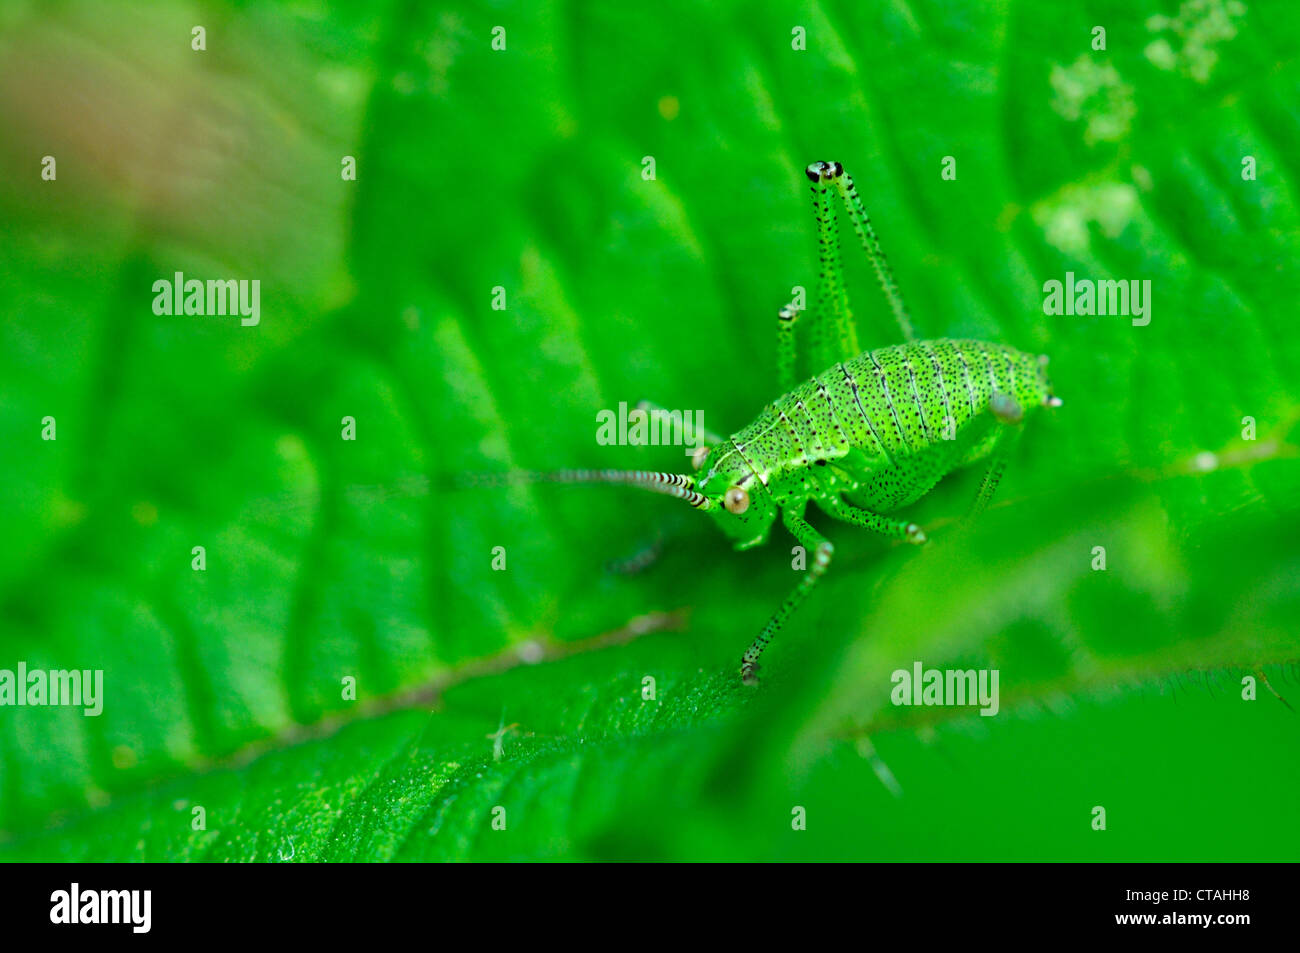 Juvenile speckled bush-cricket. Dorset, UK June 2012 Stock Photo